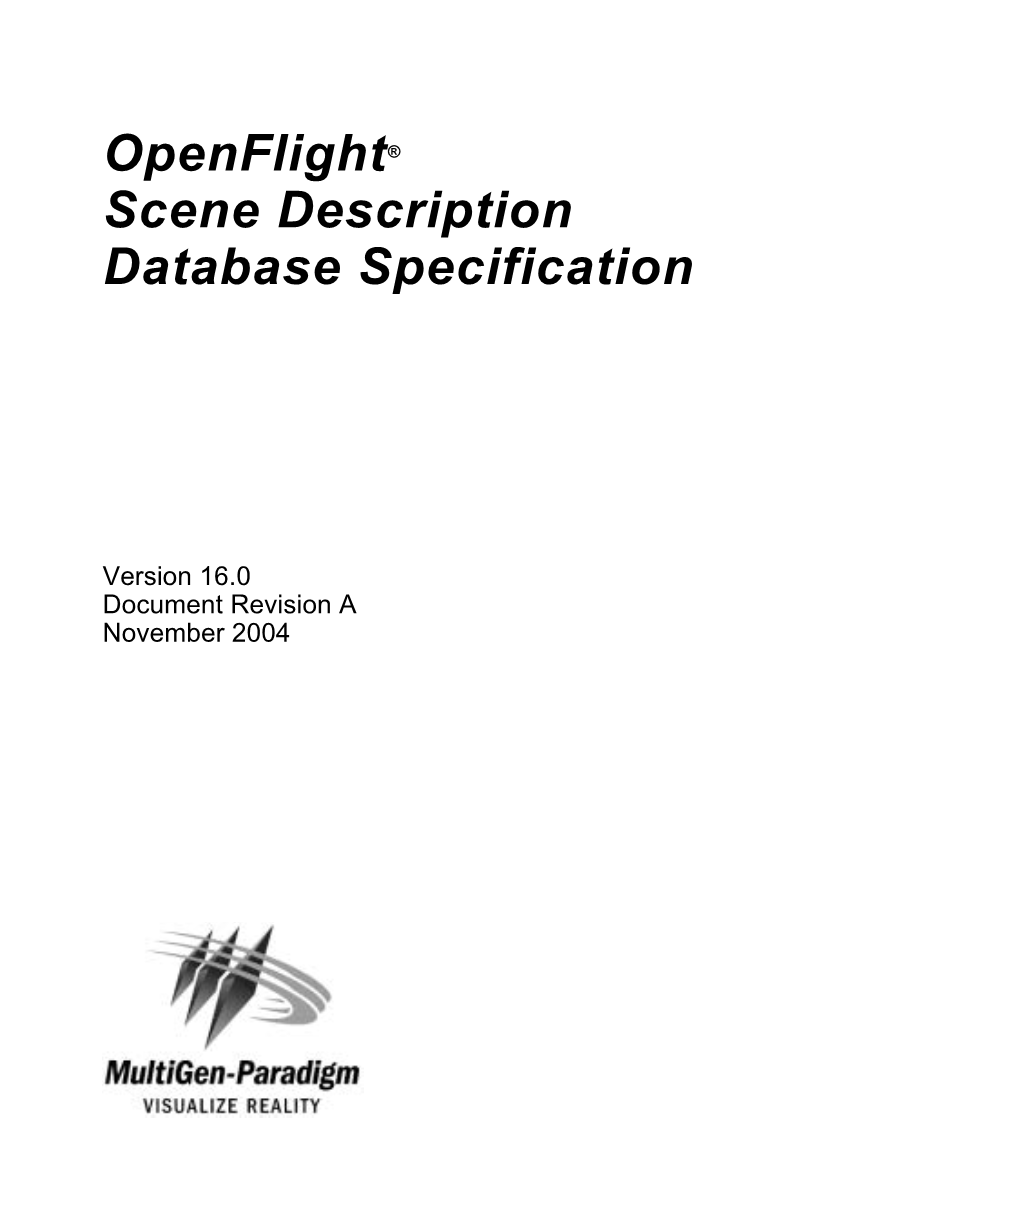 Openflight Scene Description Database Specification, Version 16.0